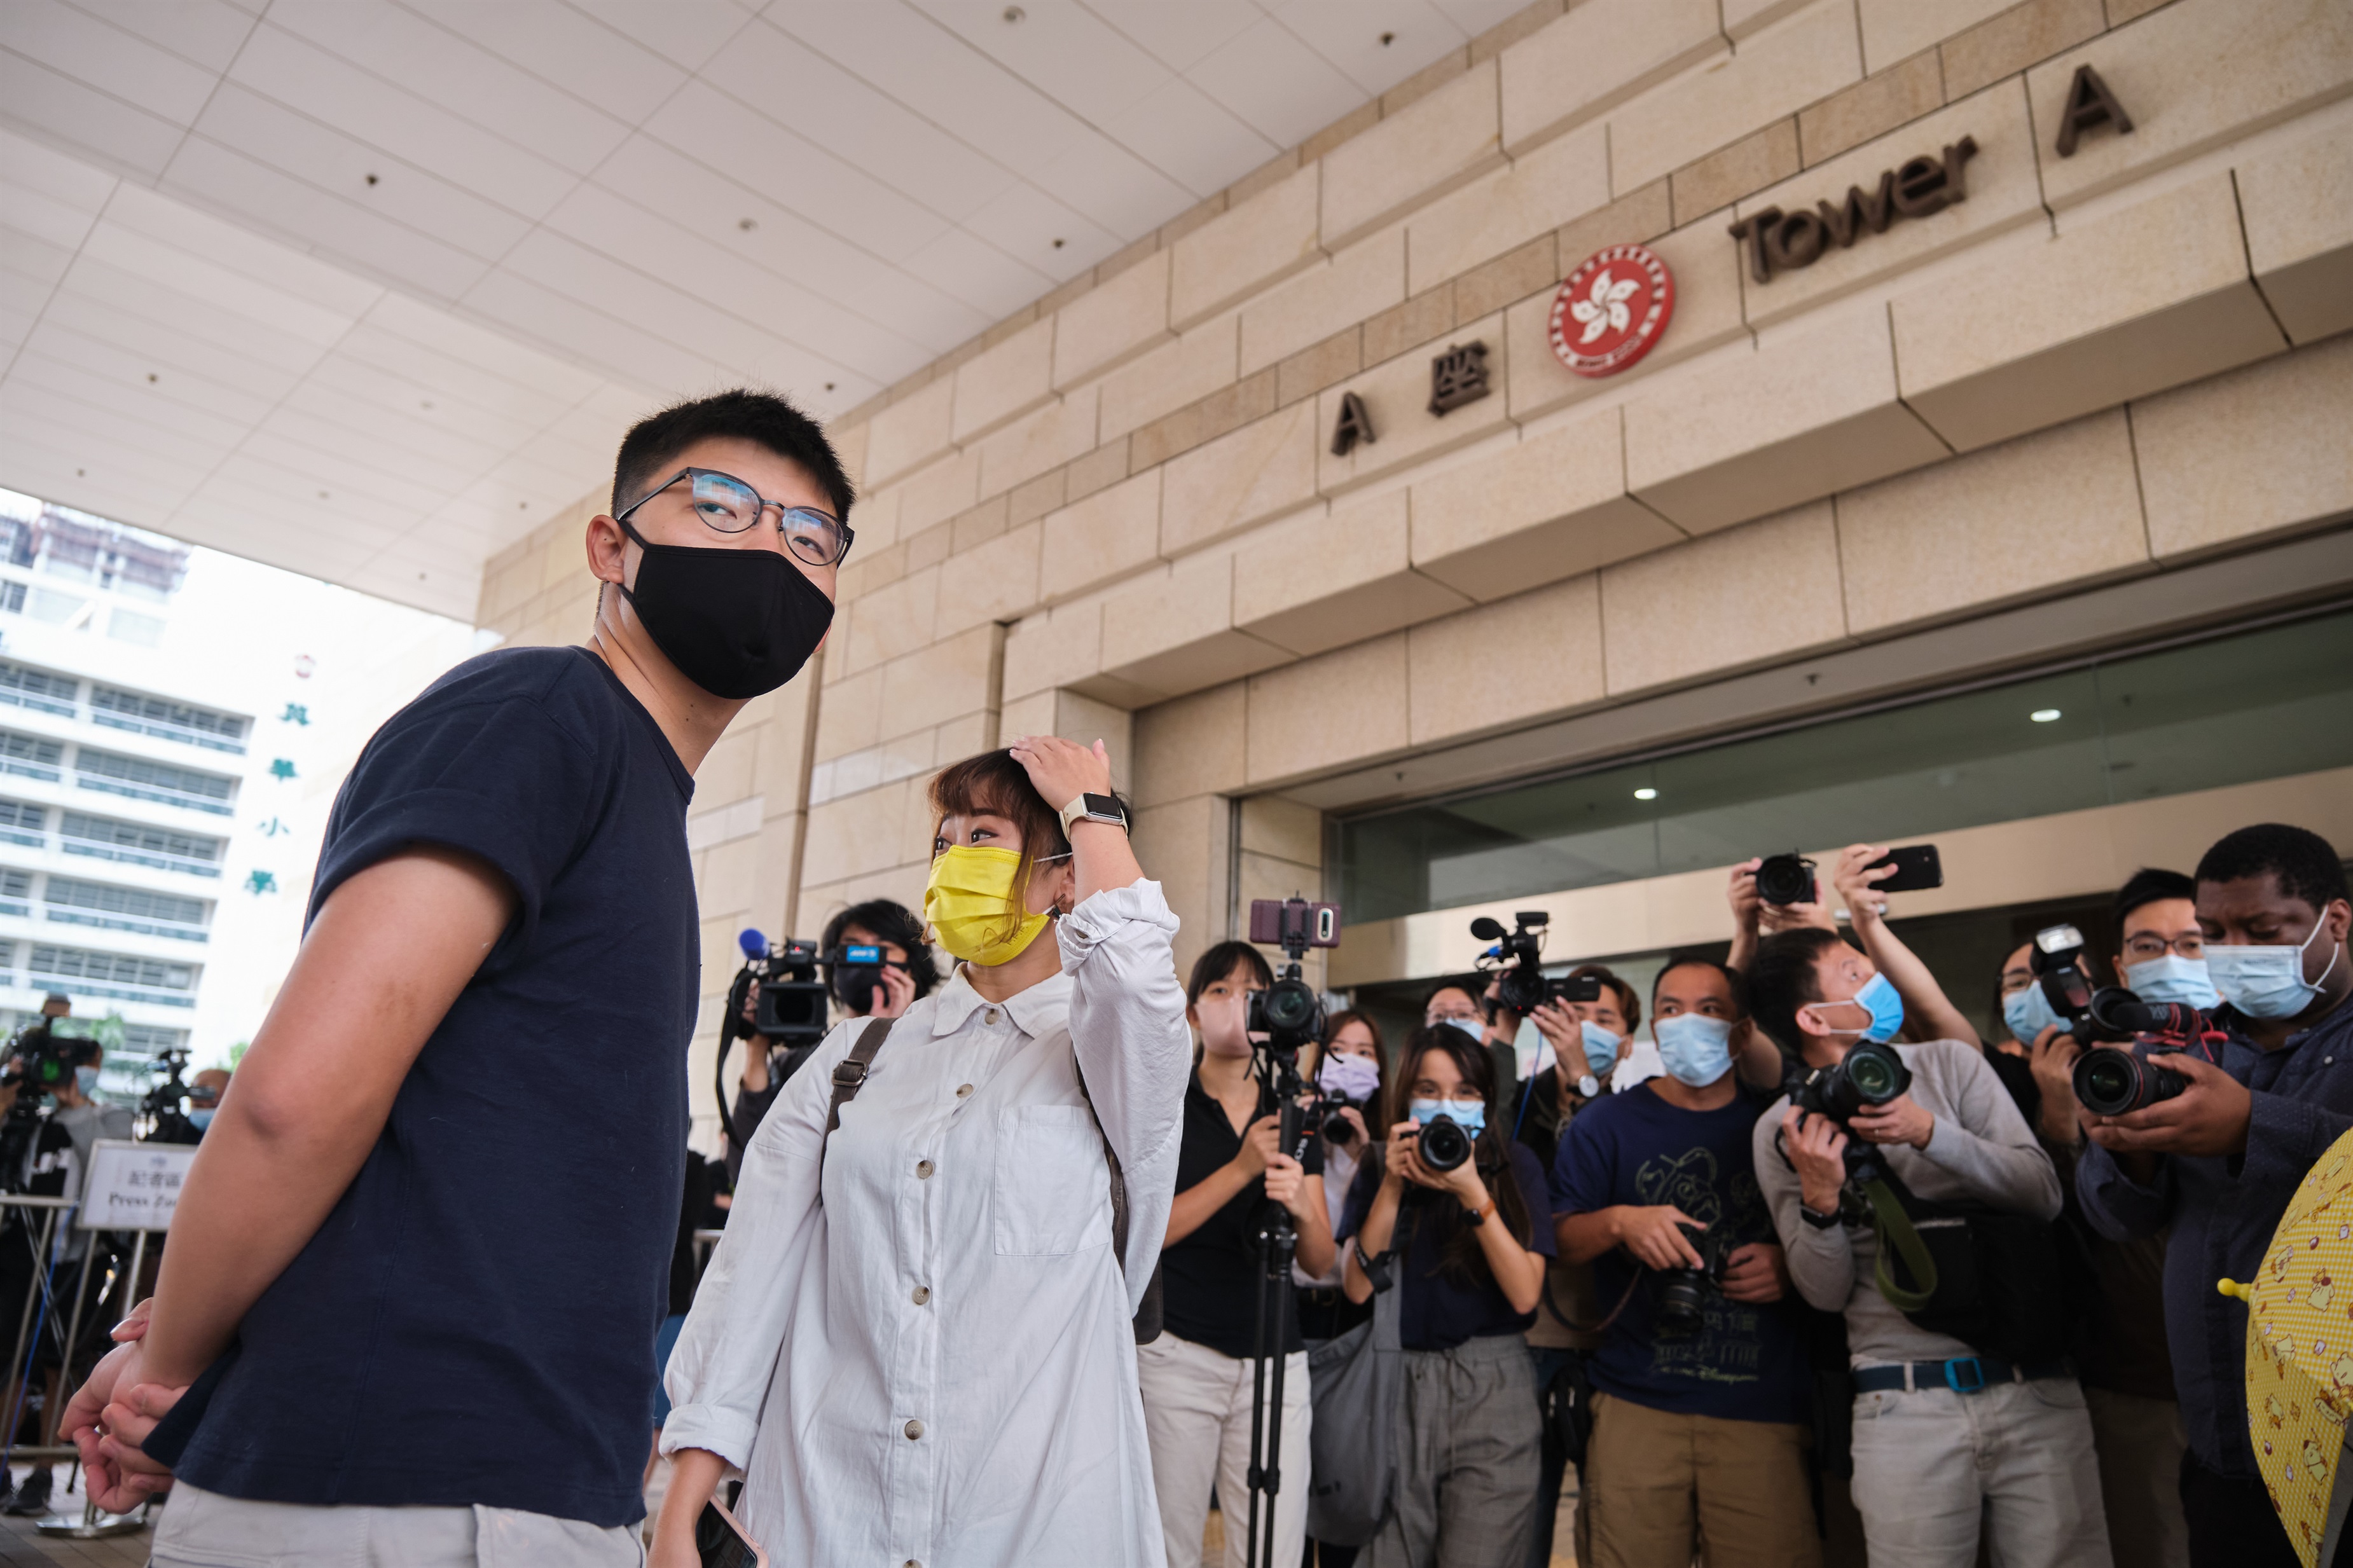 El activista prodemocracia de Hong Kong, Joshua Wong, fue detenido luego de que se declarara culpable de luchar a favor de la libertad (Europa Press)